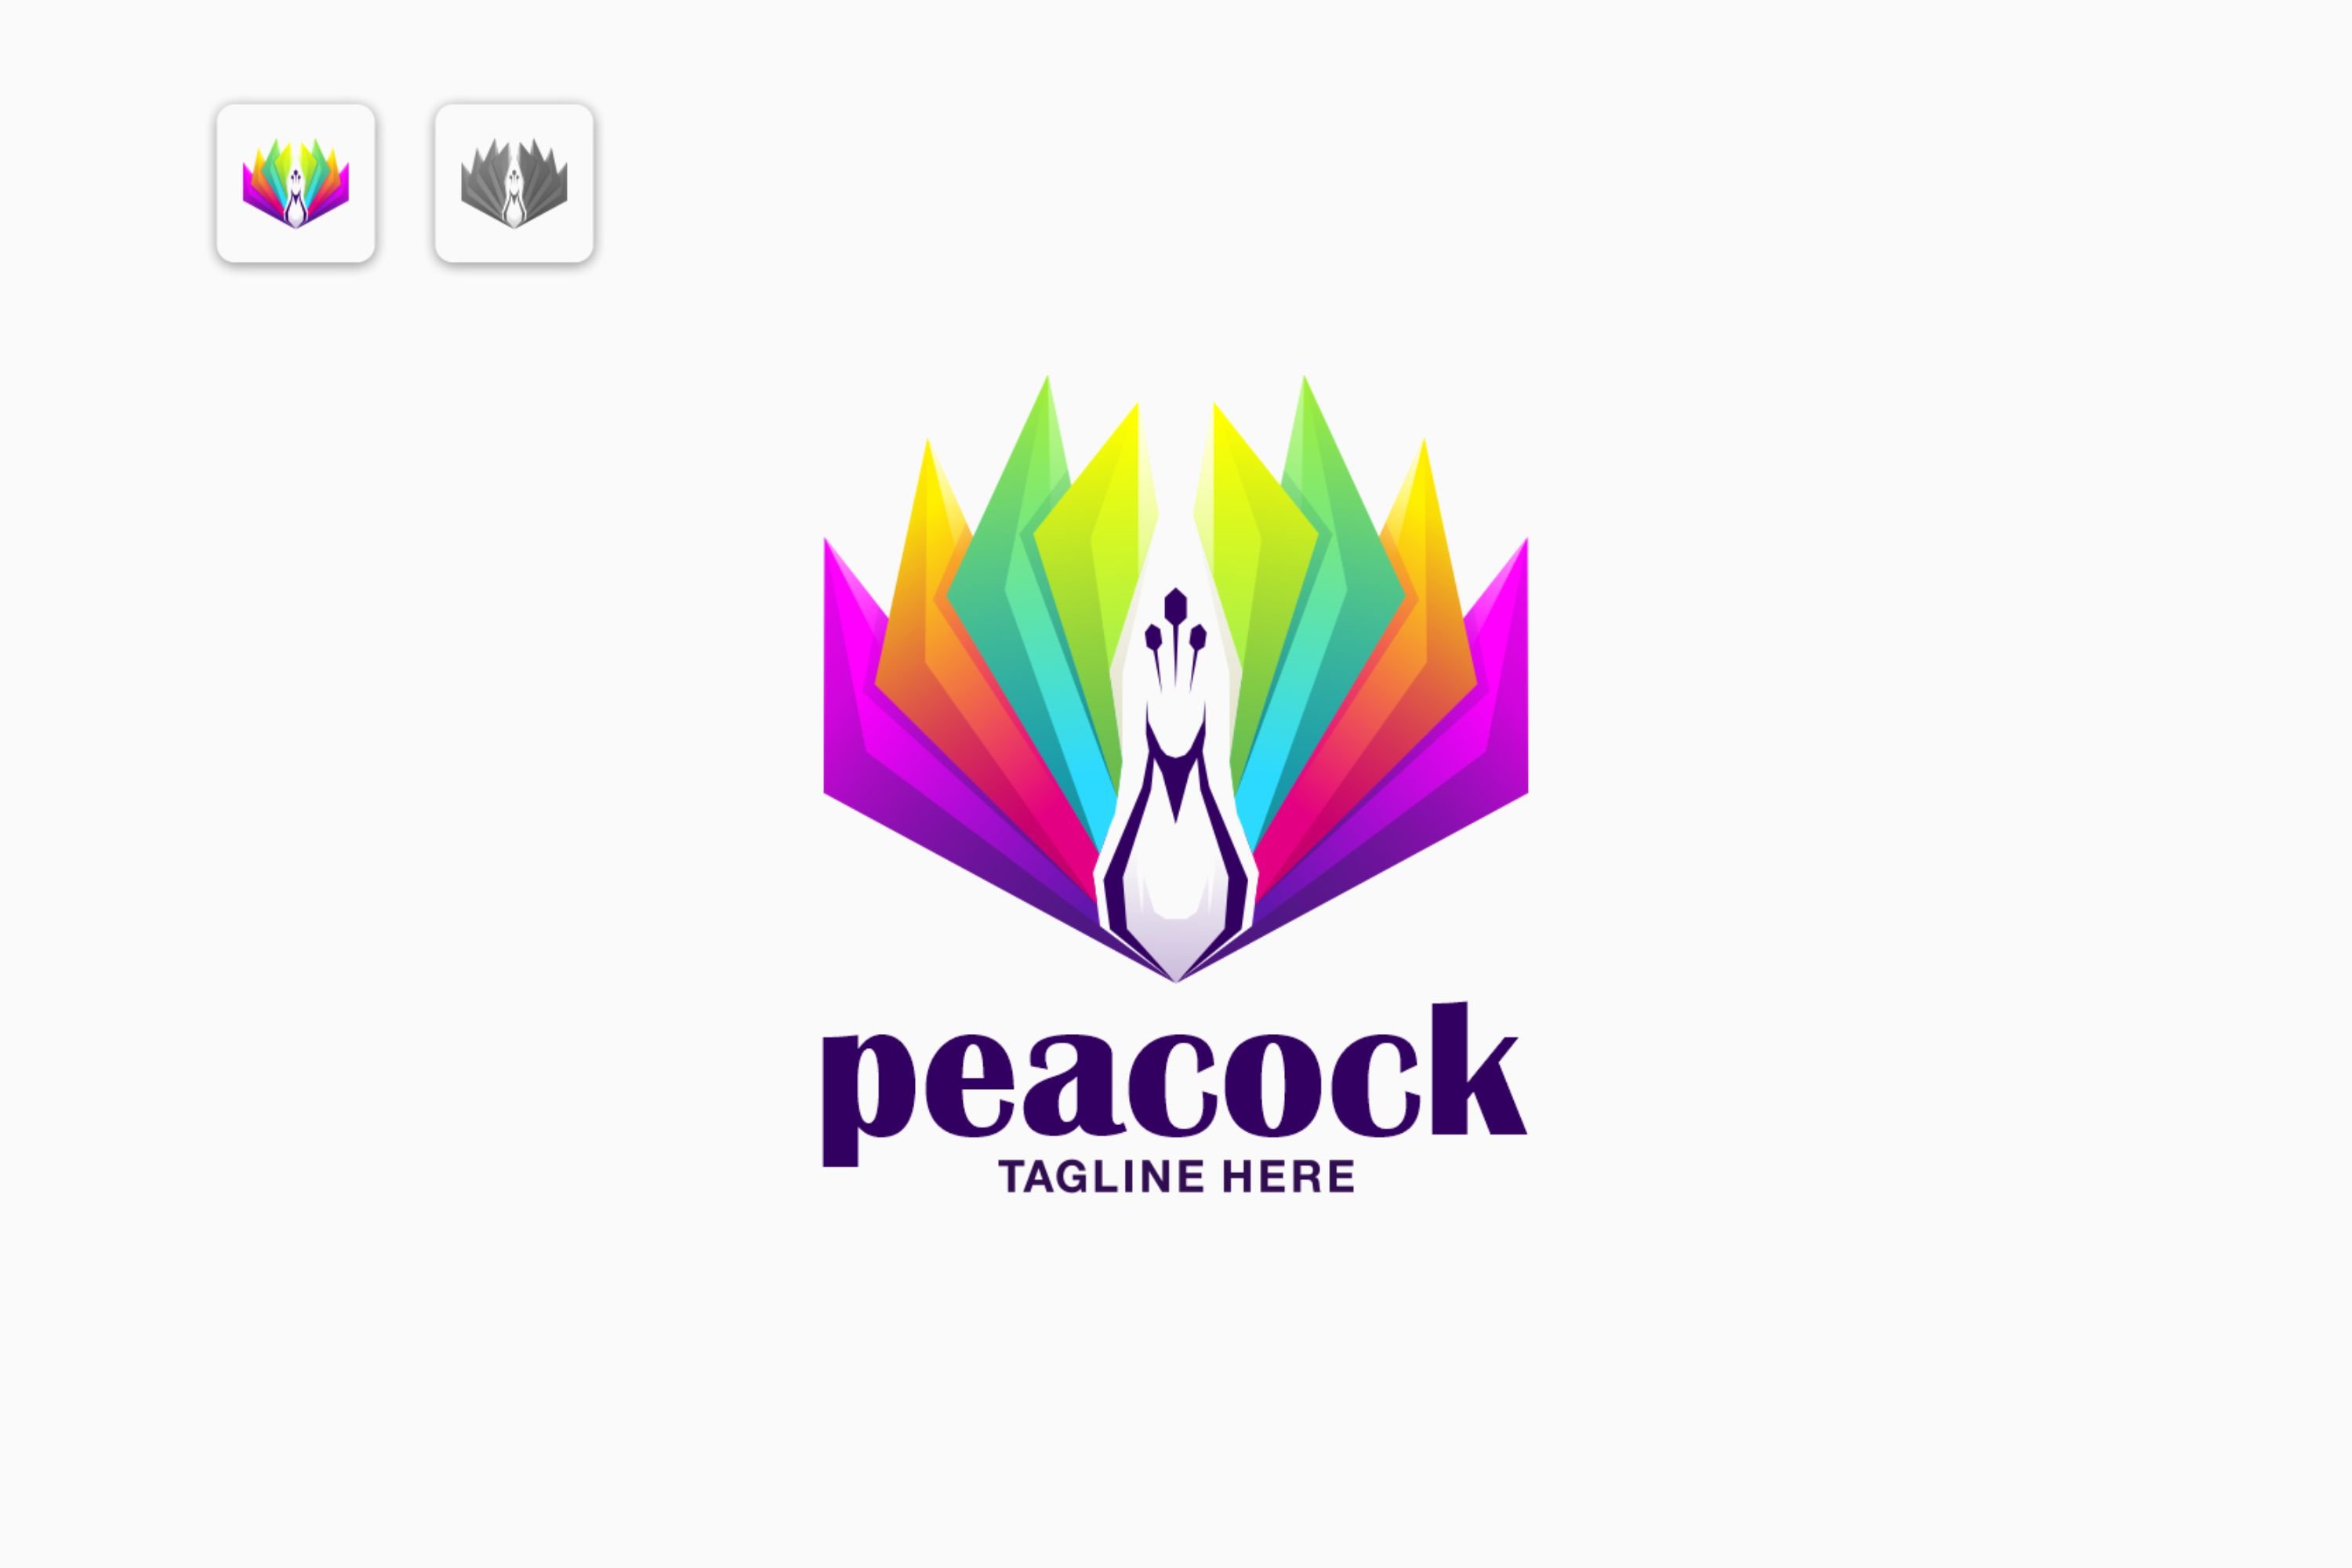 peacock logo cover image.